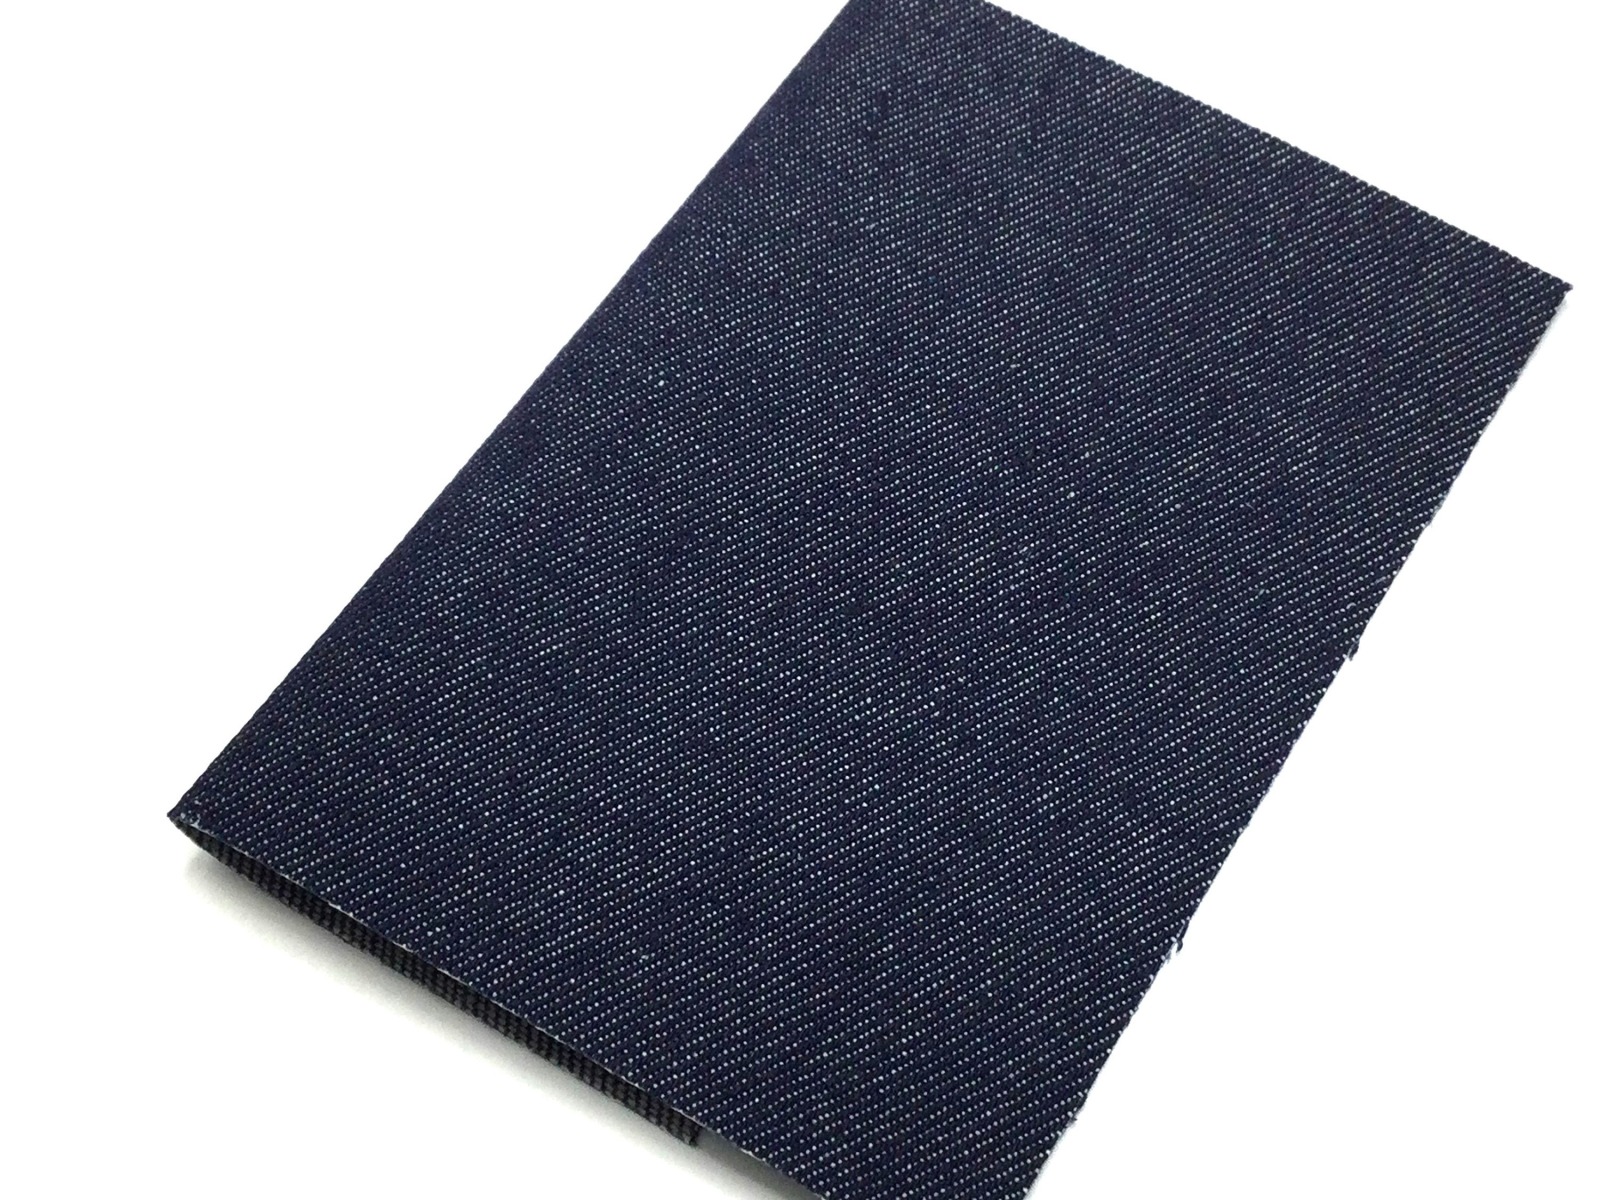 Jeansflicken | Aufbügelflicken | dunkles jeansblau | 17x15 cm